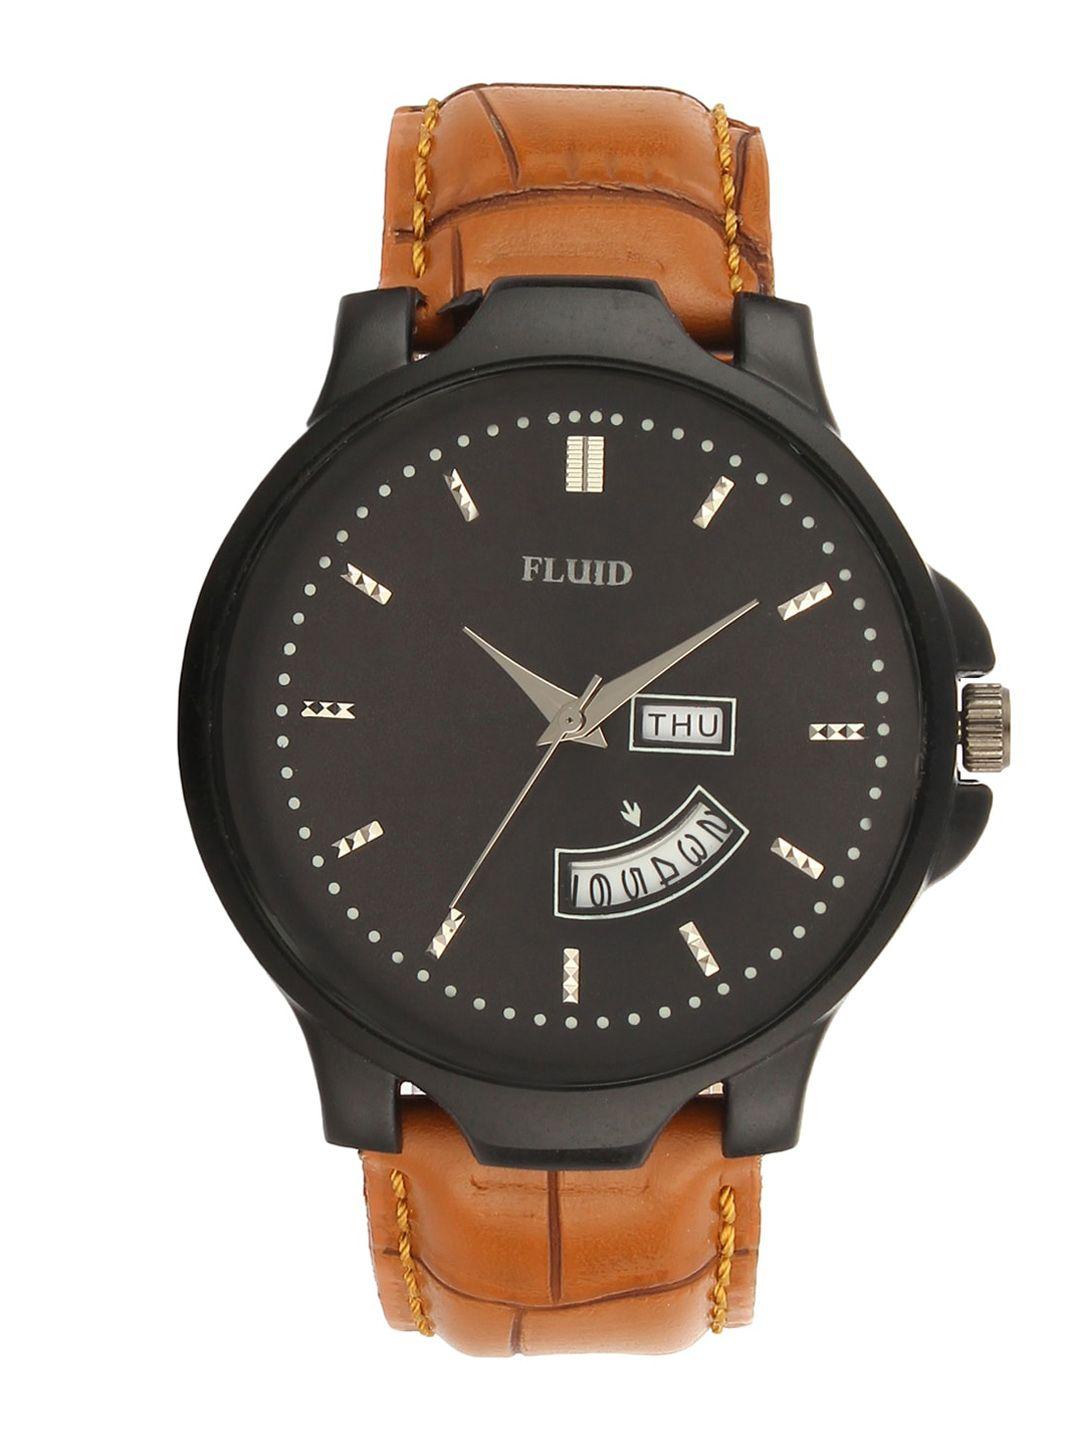 fluid men leather straps analogue watch fl23-775g-bk01